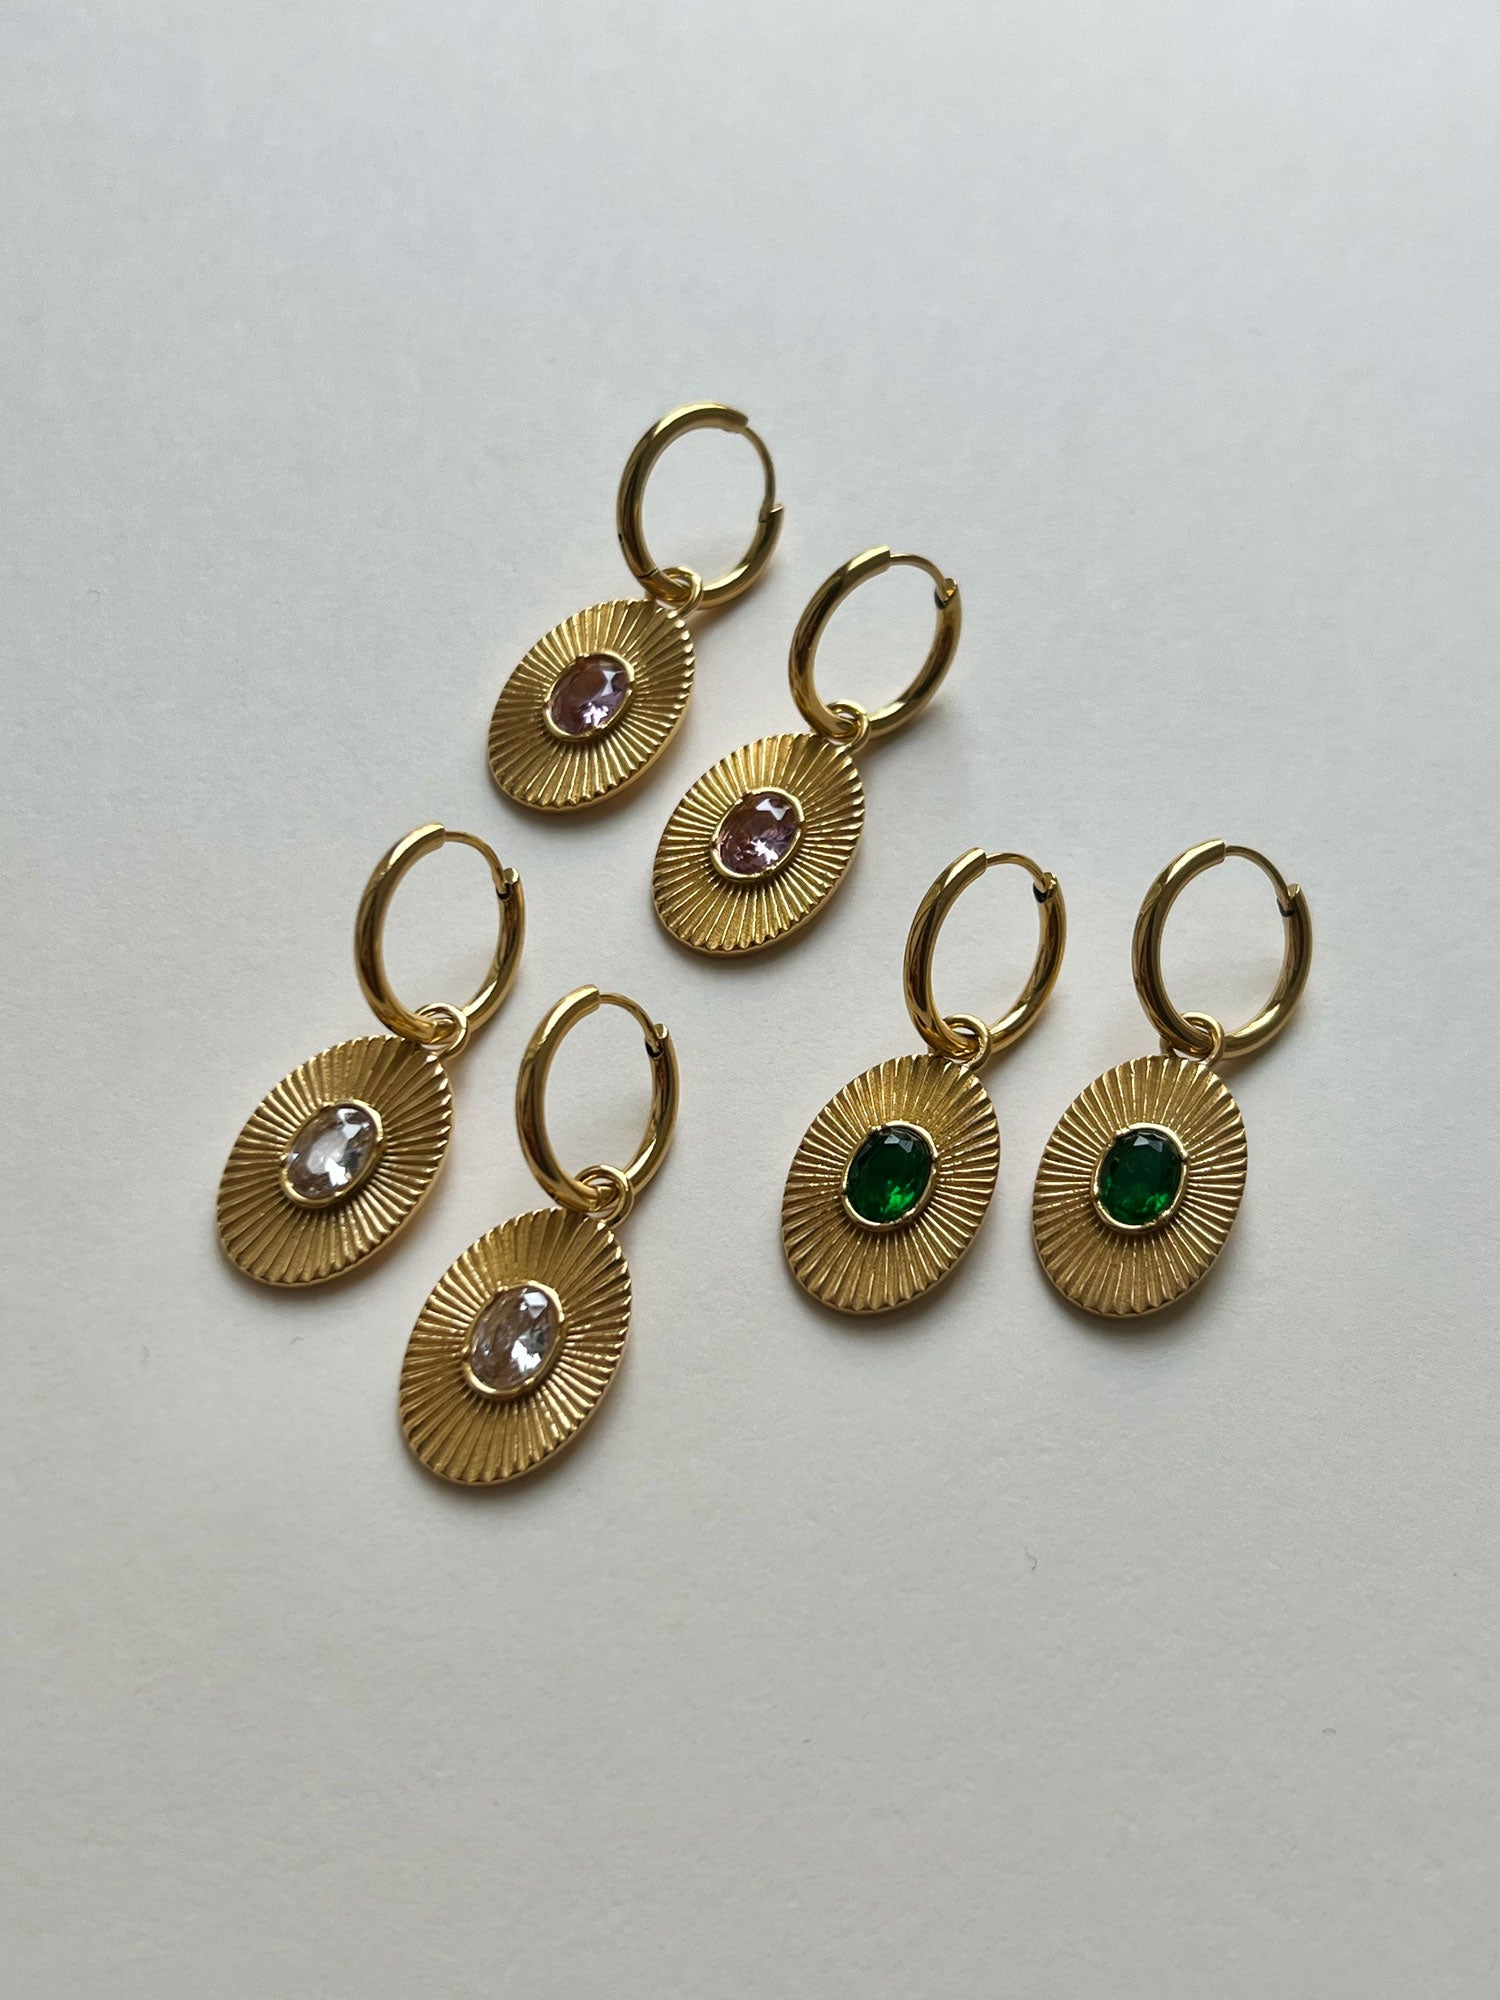 Oval Gemstone Pendant Hoops - Emerald Green